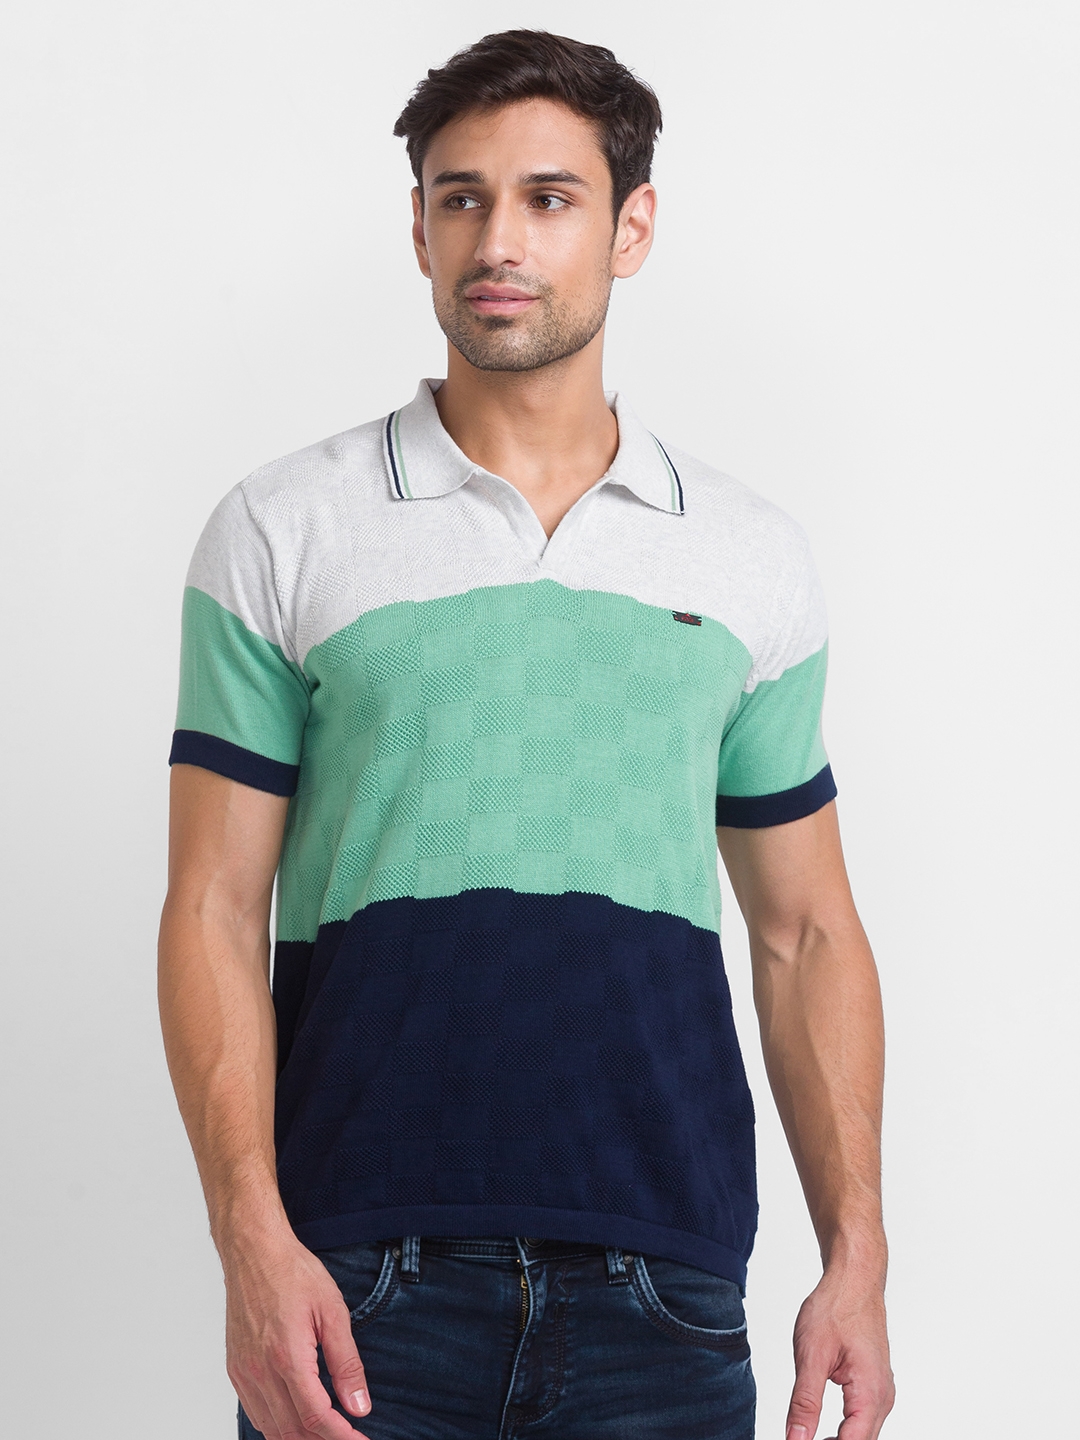 globus | Globus Mint Green Striped Tshirt